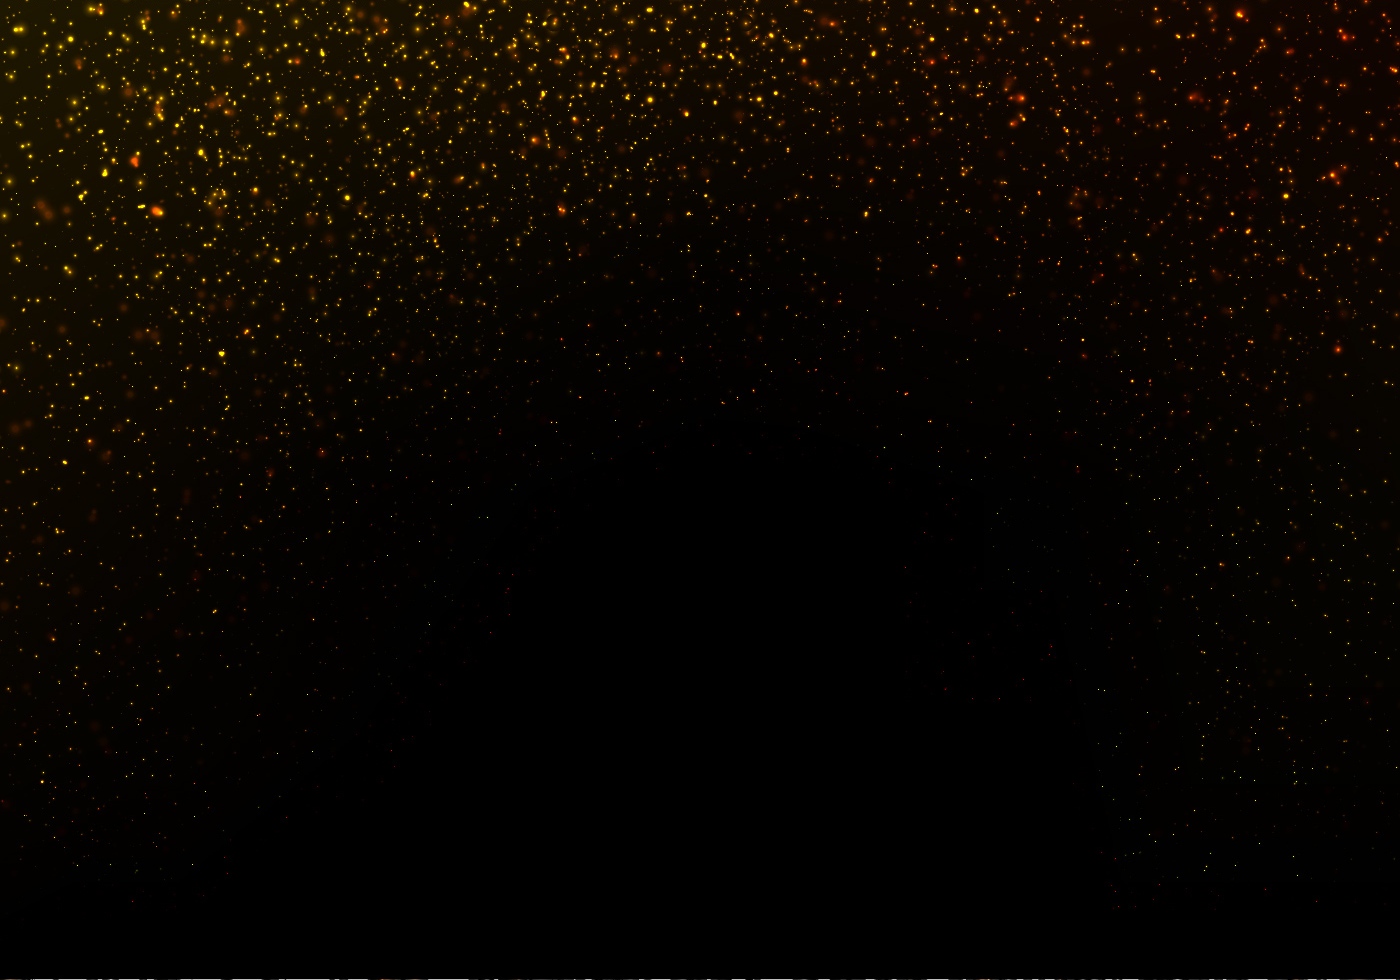 Download 9100 Koleksi Background Black Glitter Terbaik